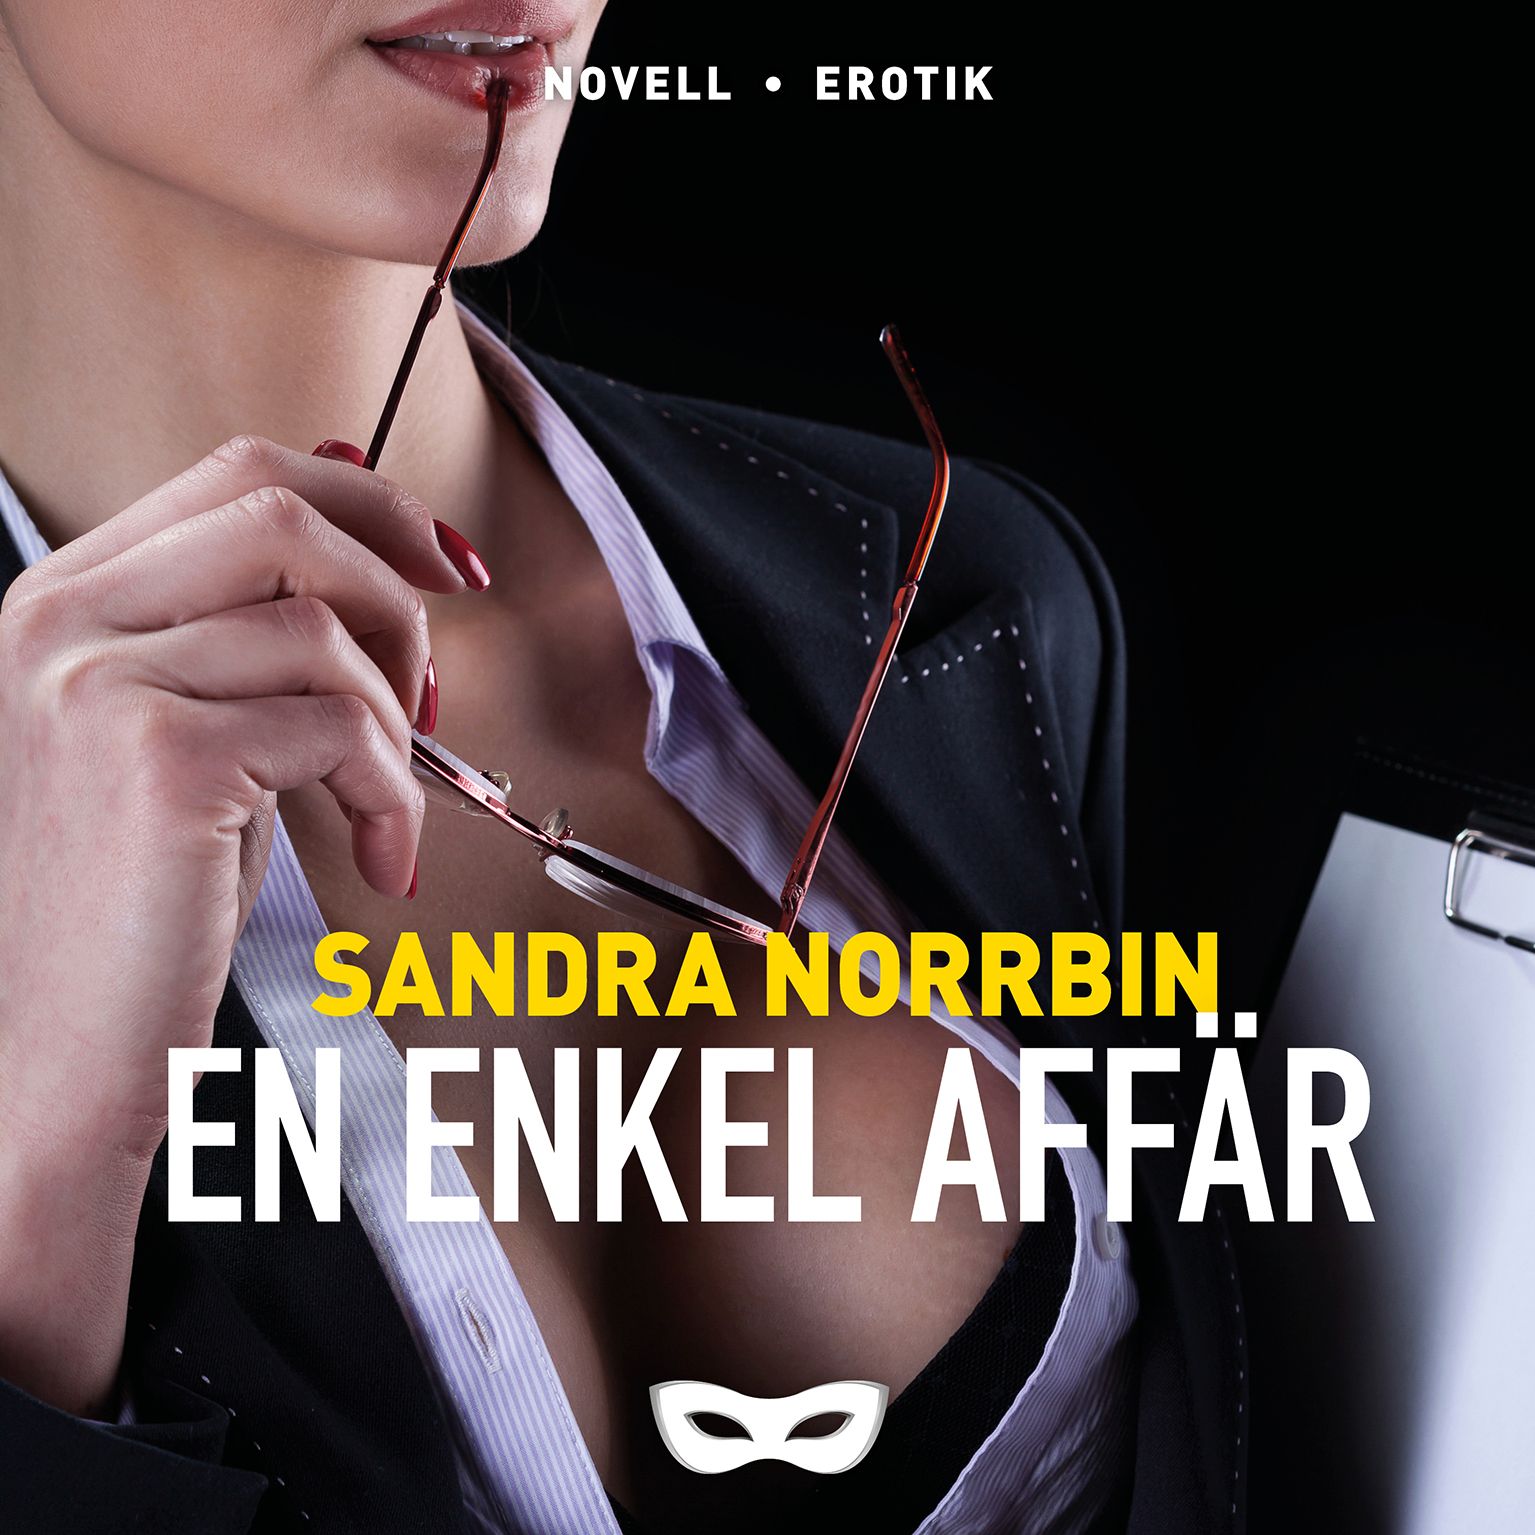 En enkel affär, audiobook by Sandra Norrbin